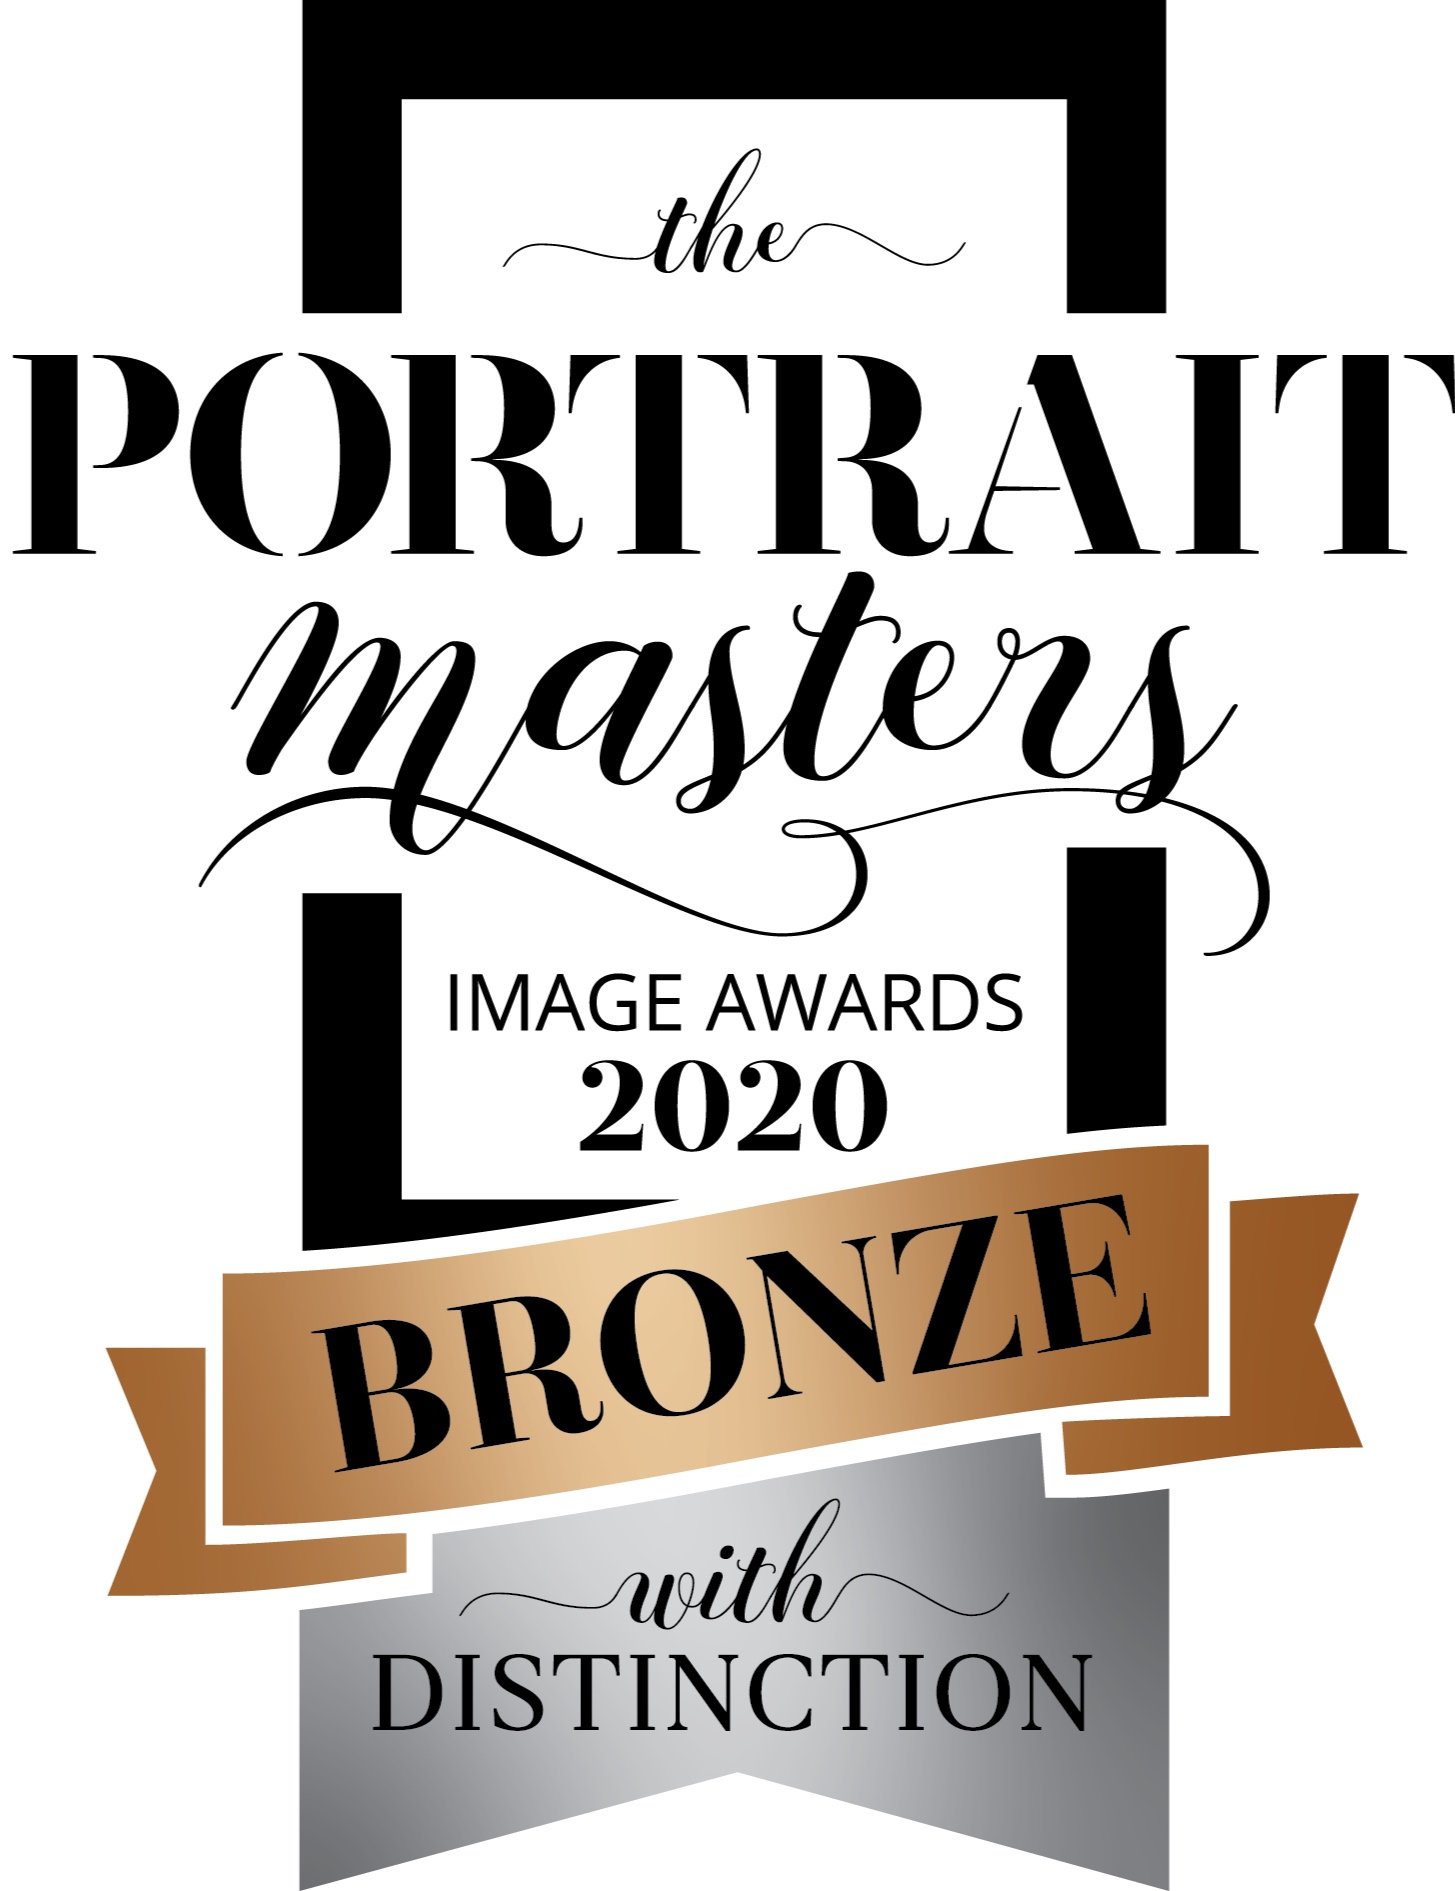 BRONZE+-+TPM+2020+Image+Award+Distinction+%28blk%29.jpg